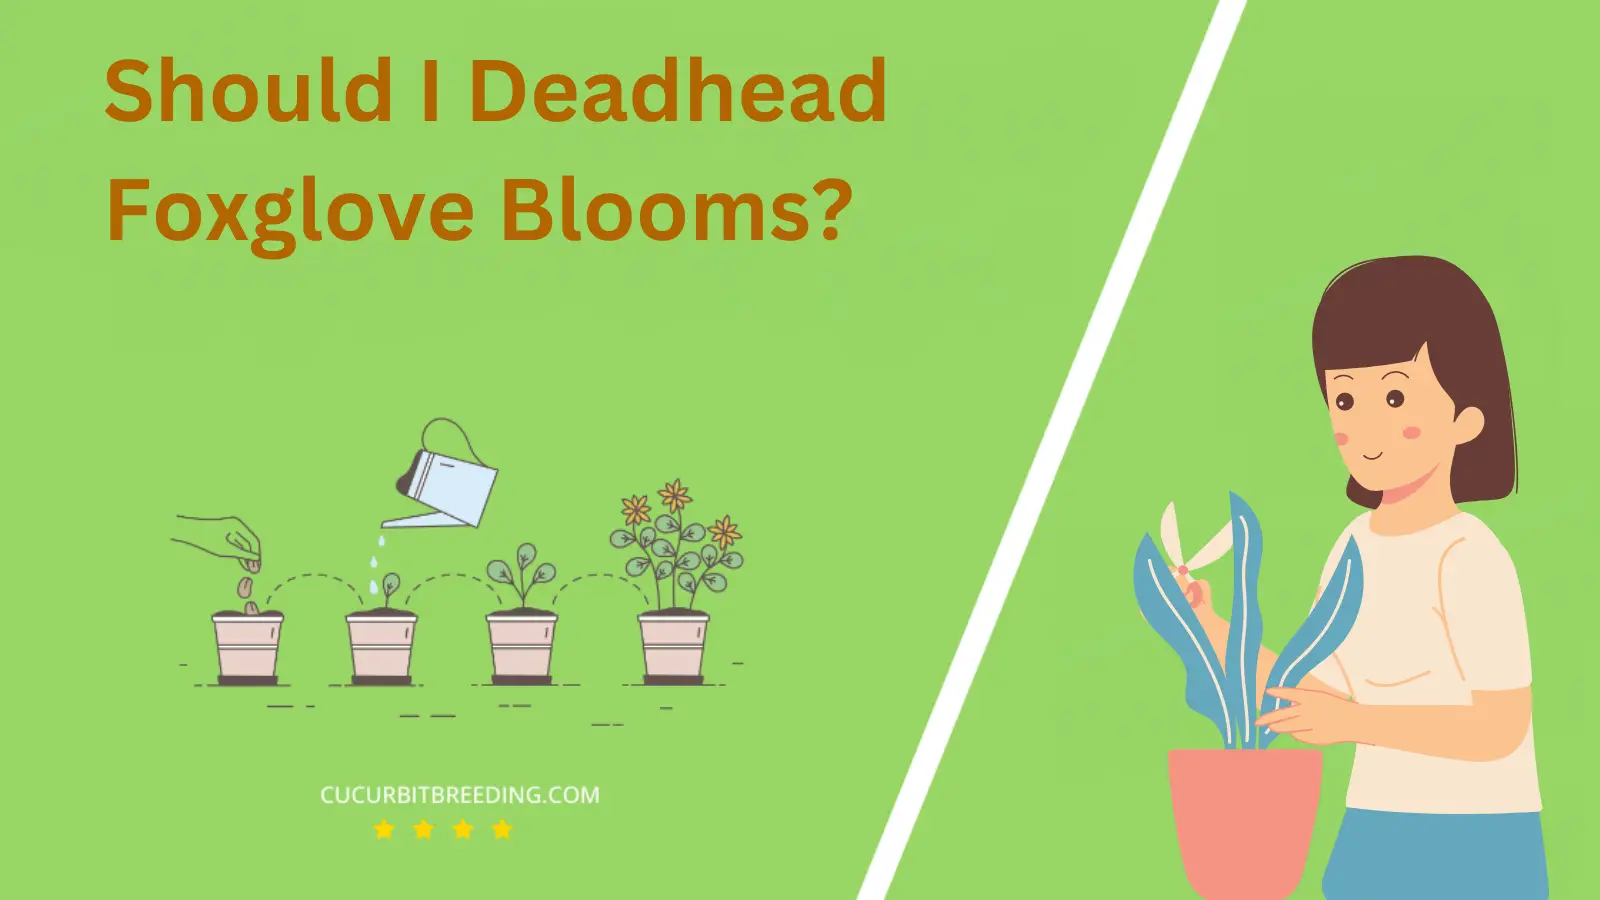 Should I Deadhead Foxglove Blooms?